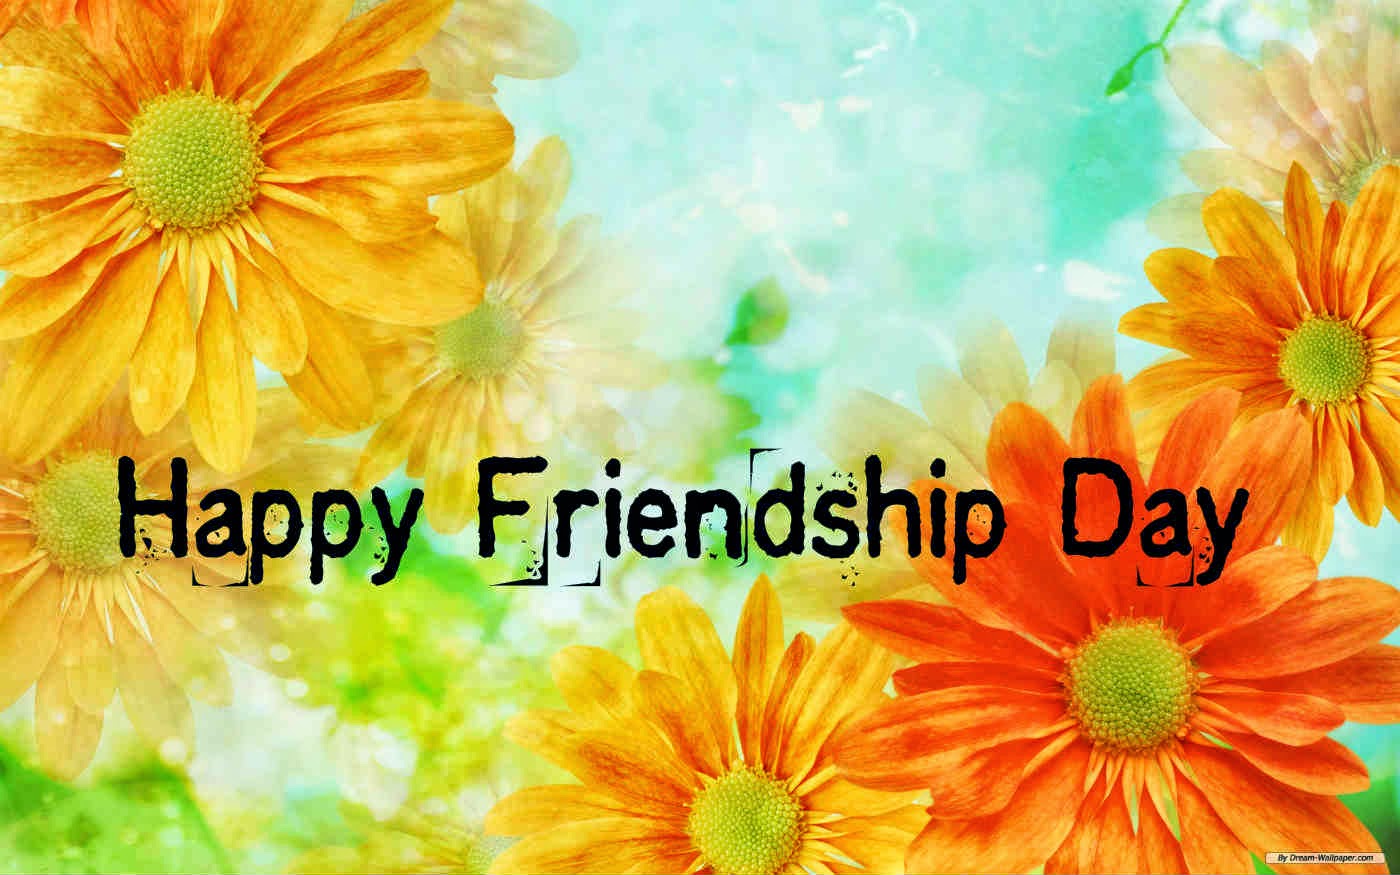 My friends to be glad. Международный день друзей на английском. Открытка с днем дружбы на английском. Открытки с цветами на английском языке. Happy Friendship.